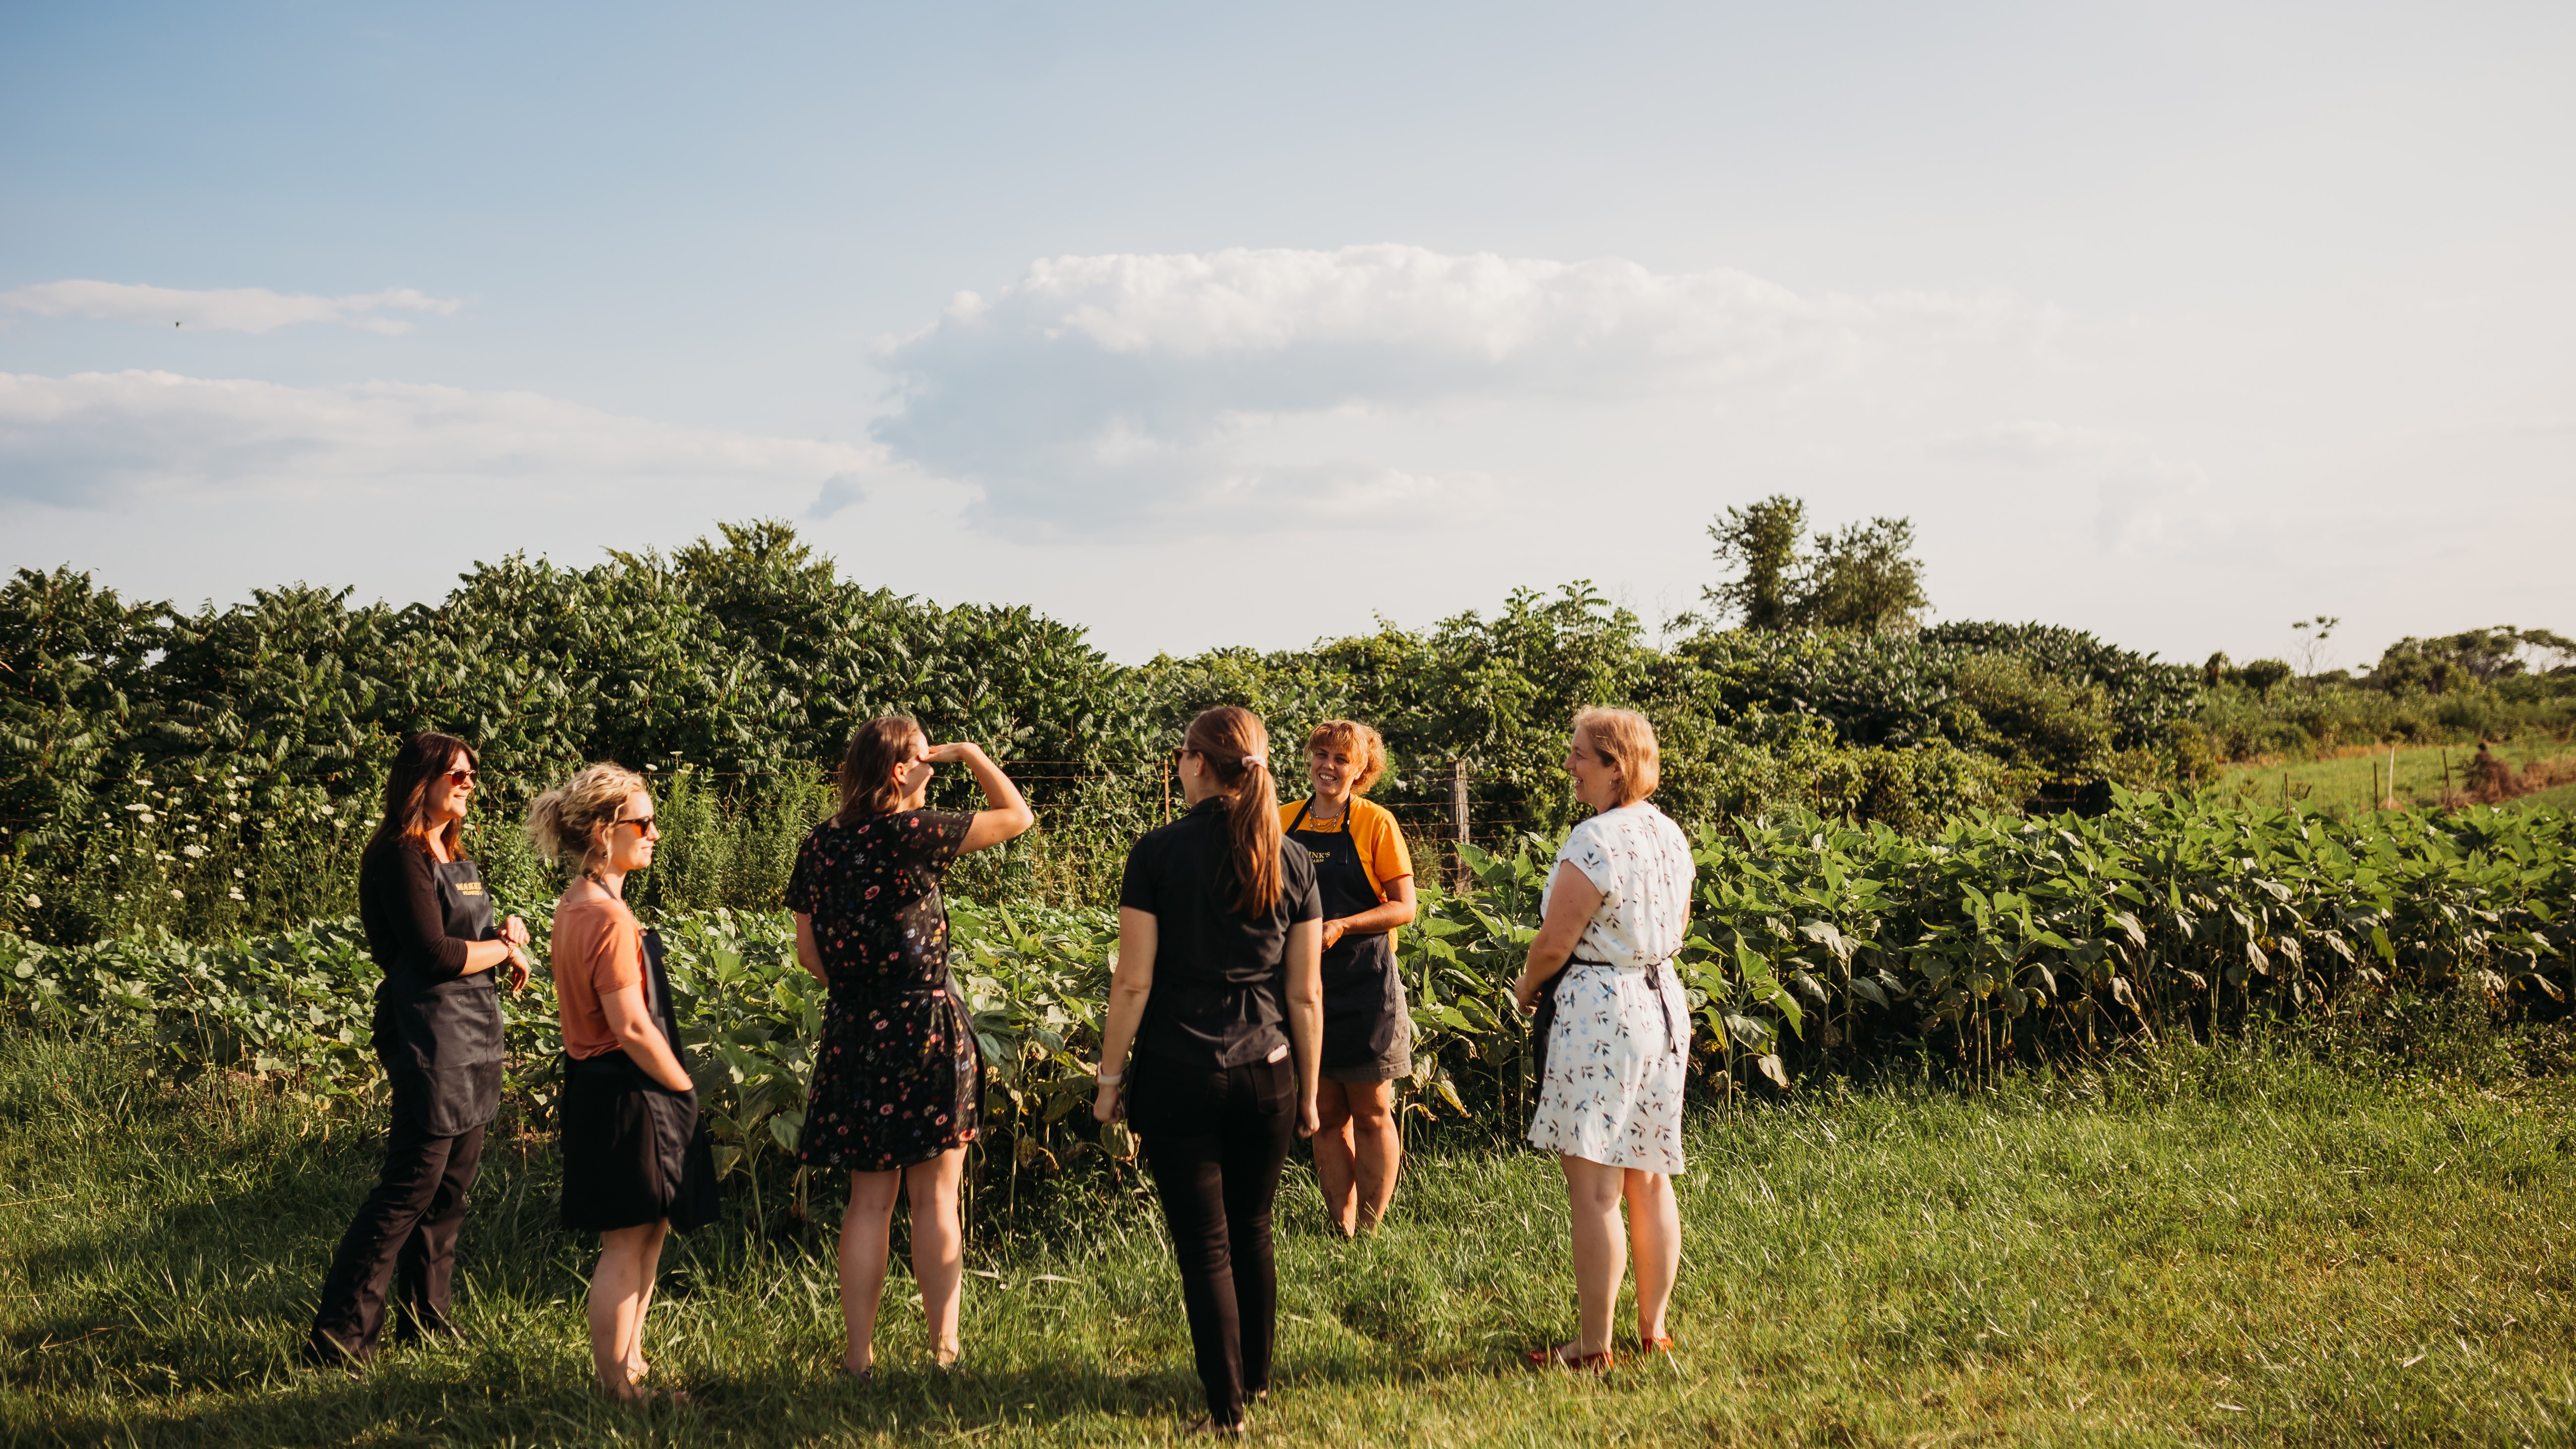 group of 6 women standing in a grassy field talking